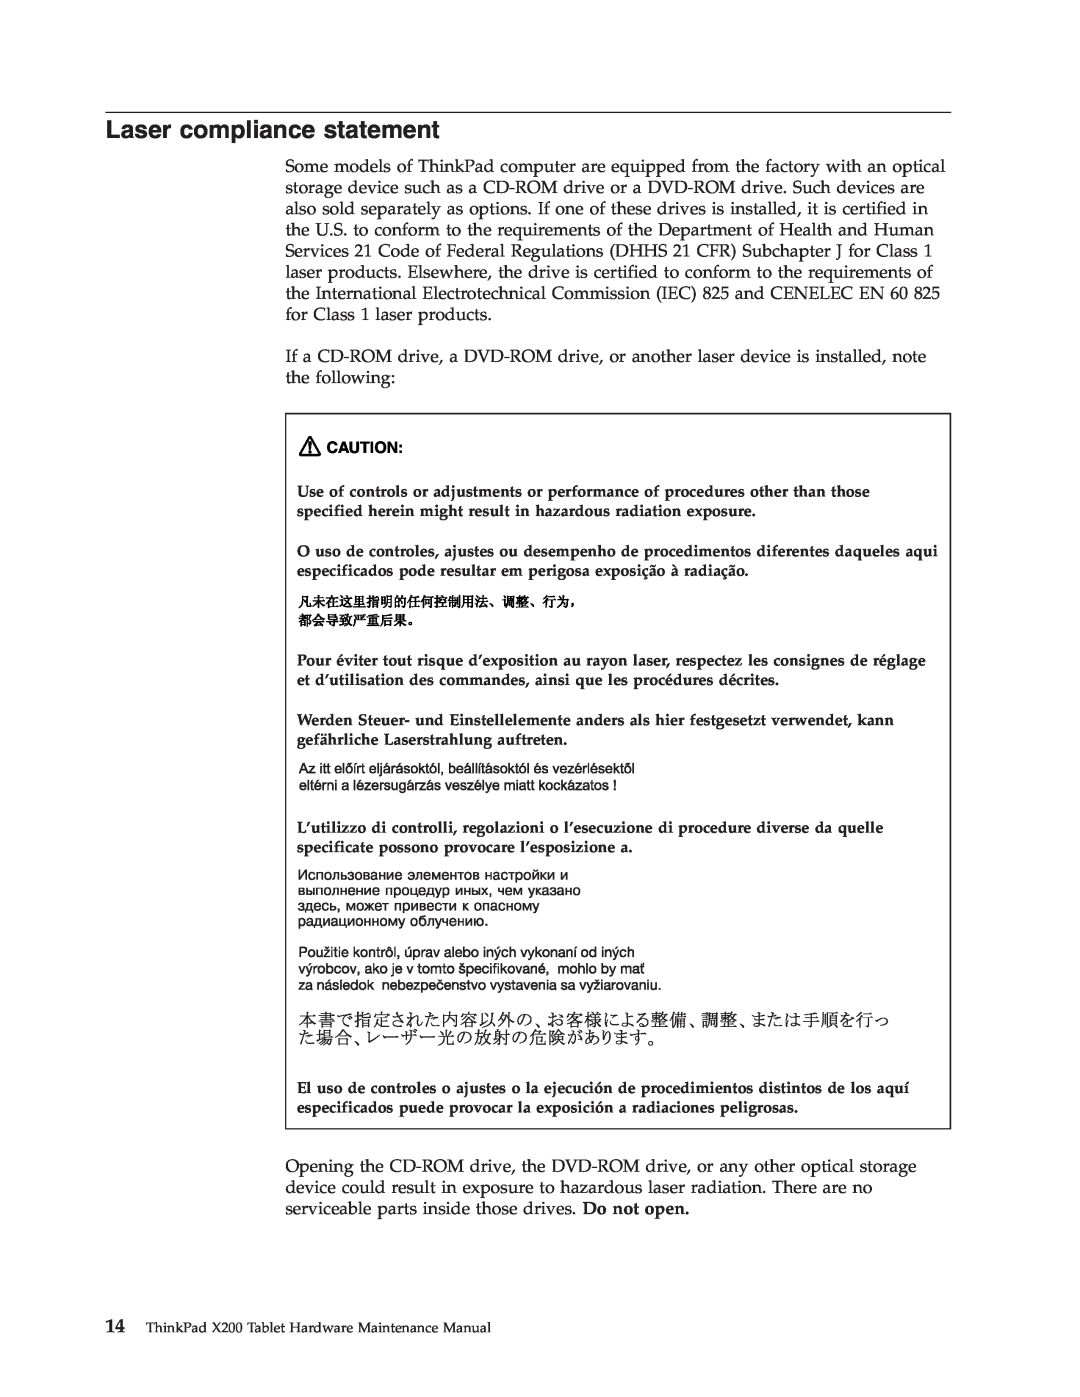 Lenovo X200 manual Laser compliance statement 